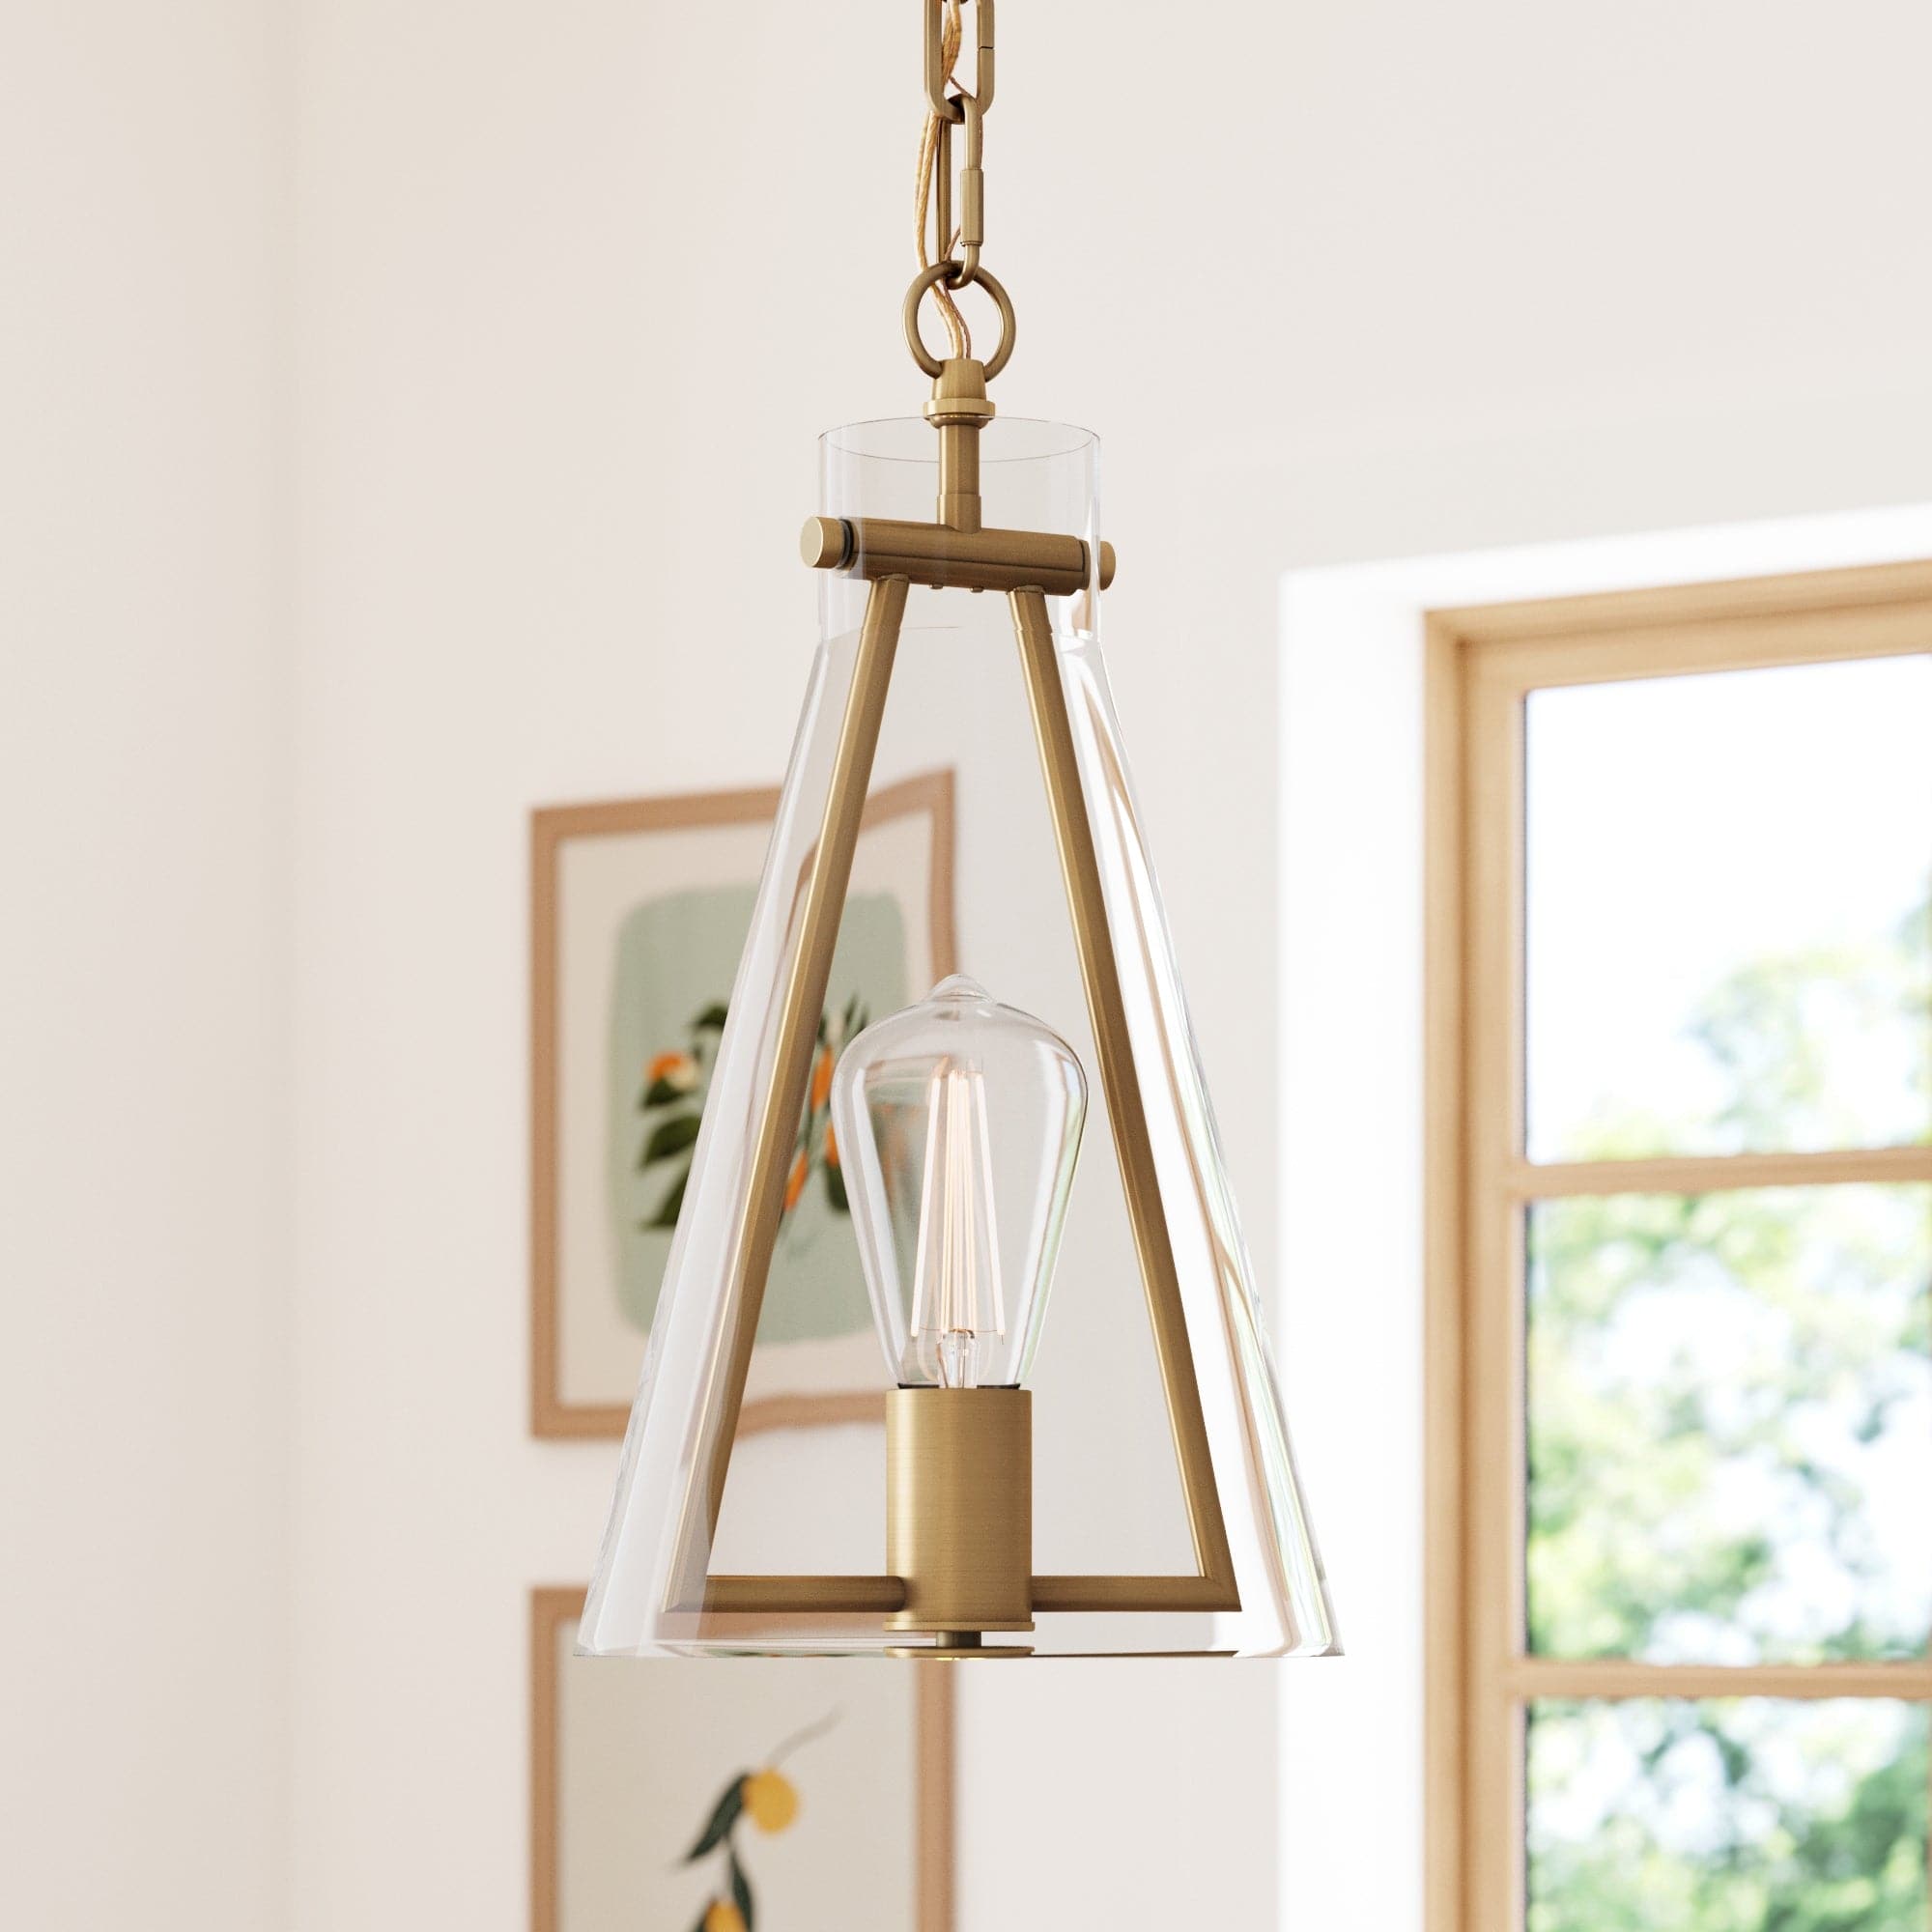 Glass Shade Hanging Ceiling Pendant Light Vintaged Brass